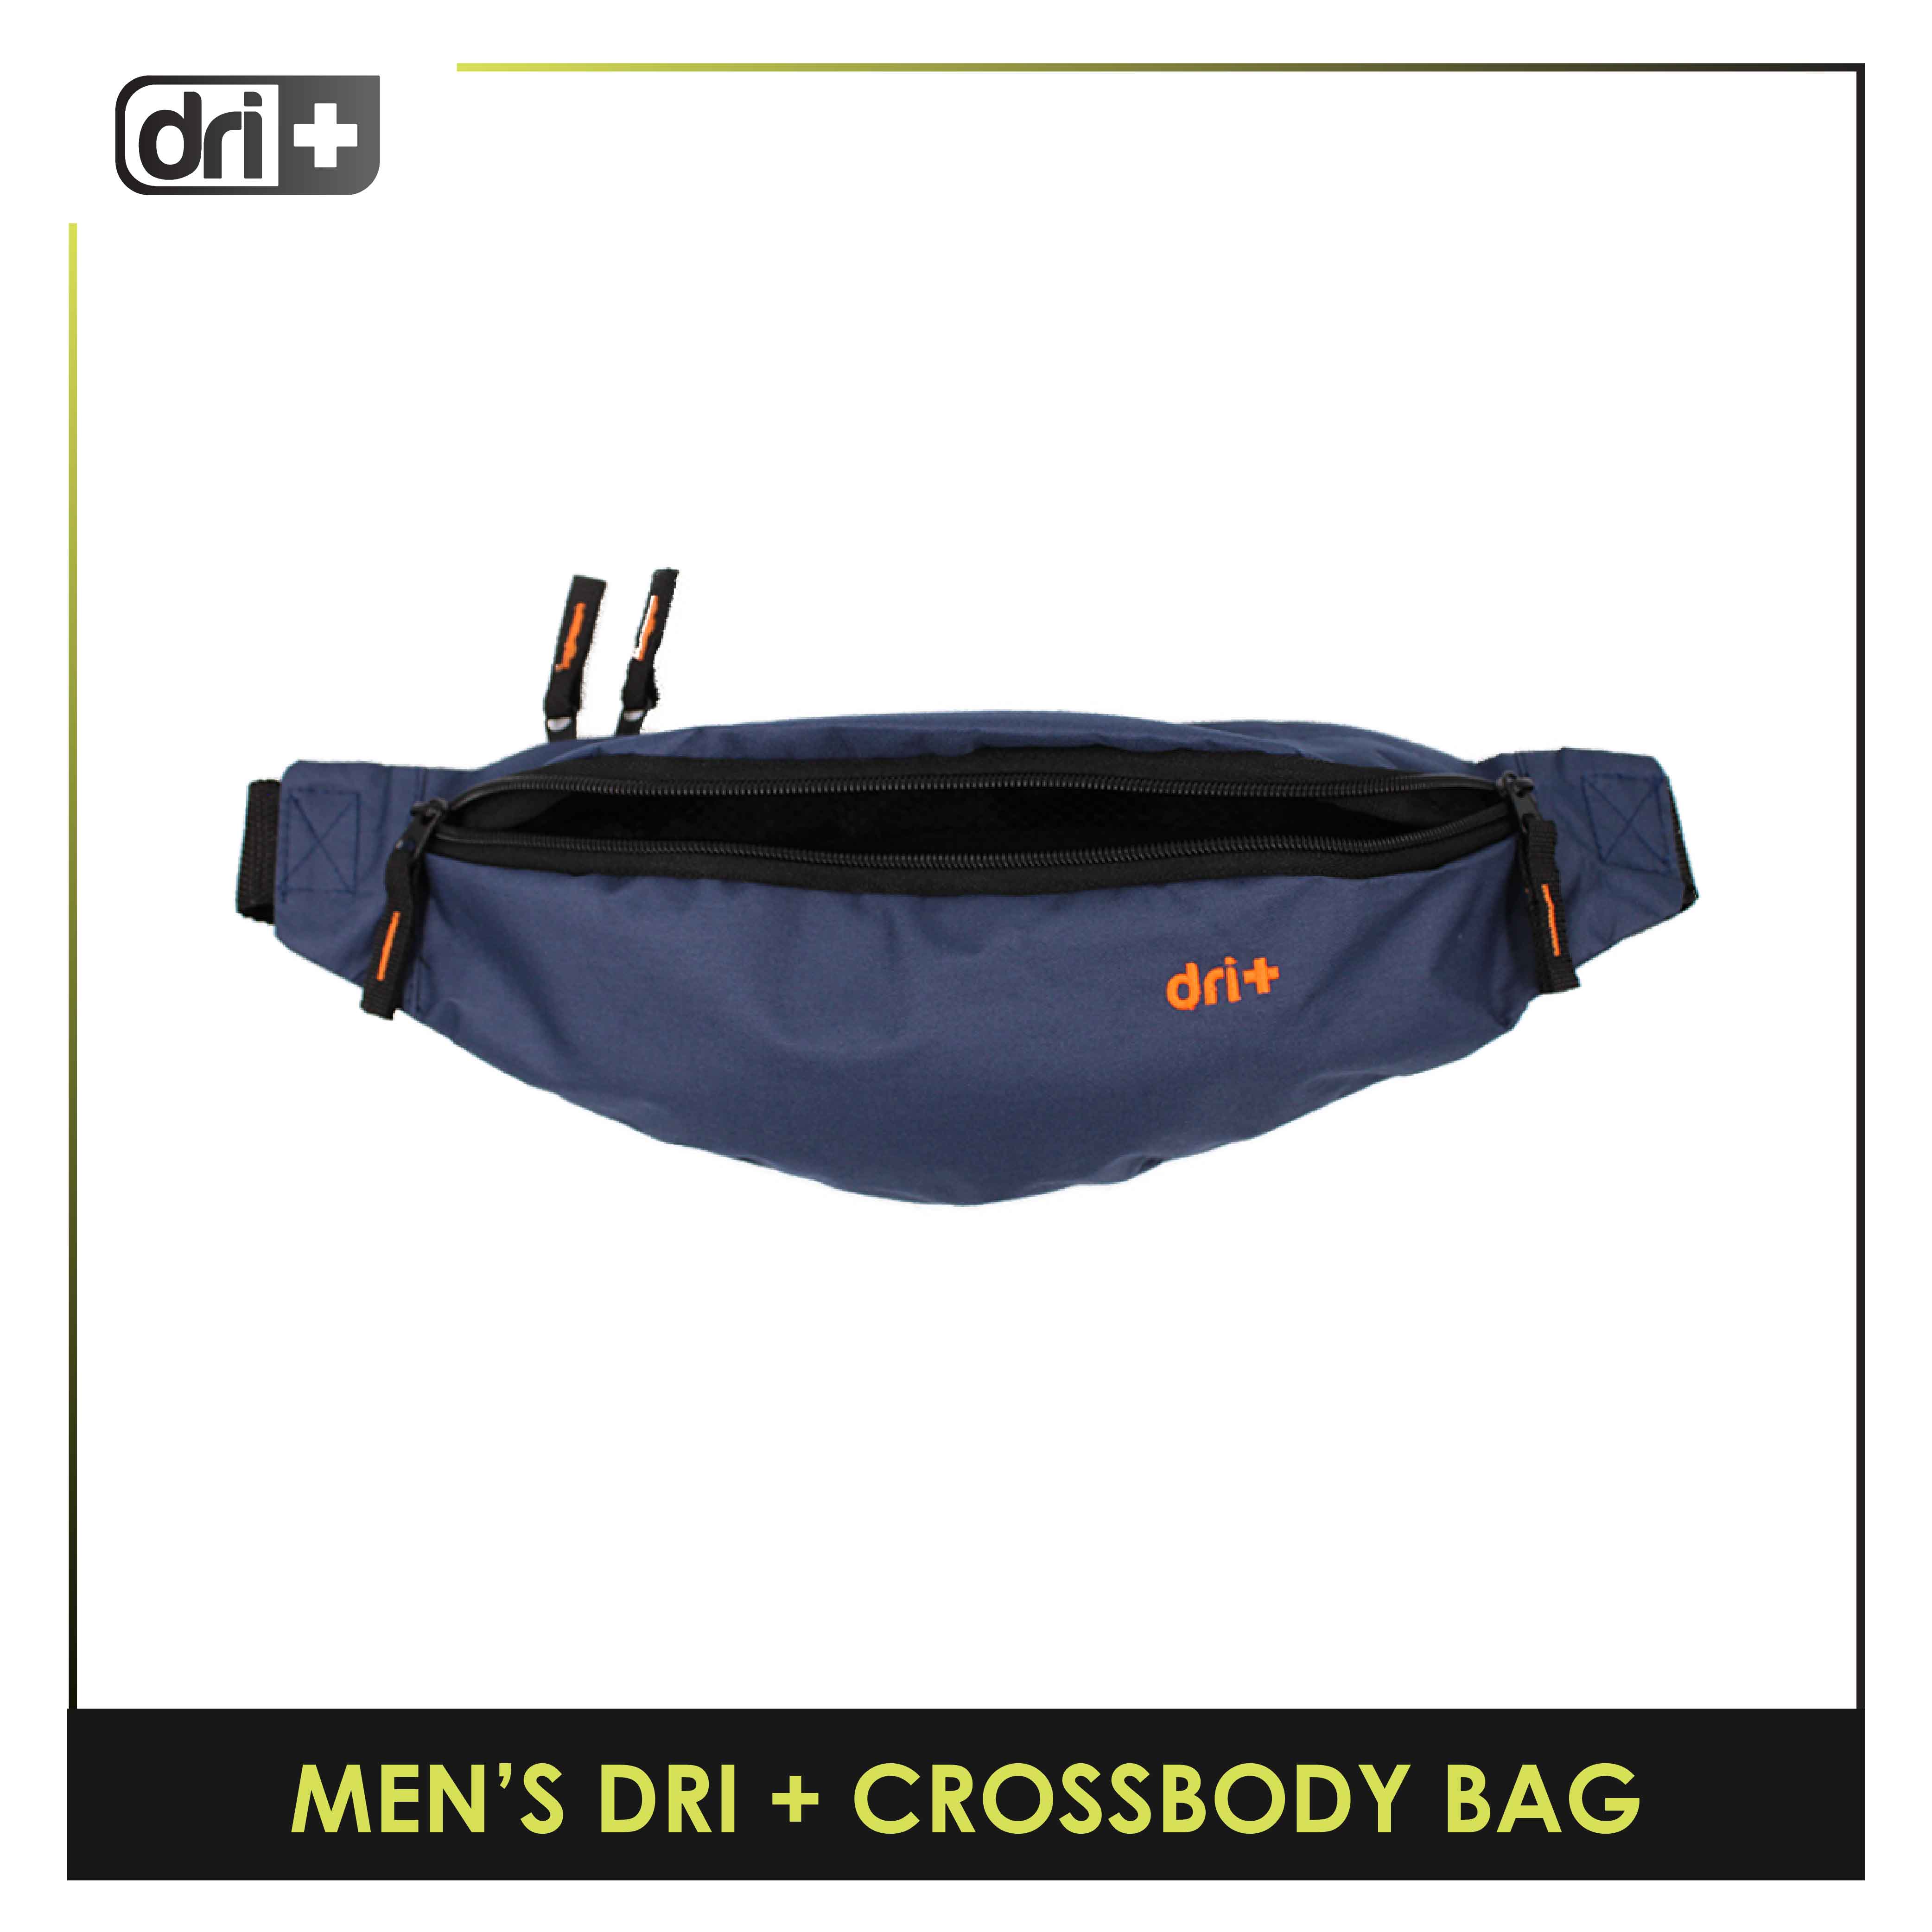 Interchangeable body bag or waist bag